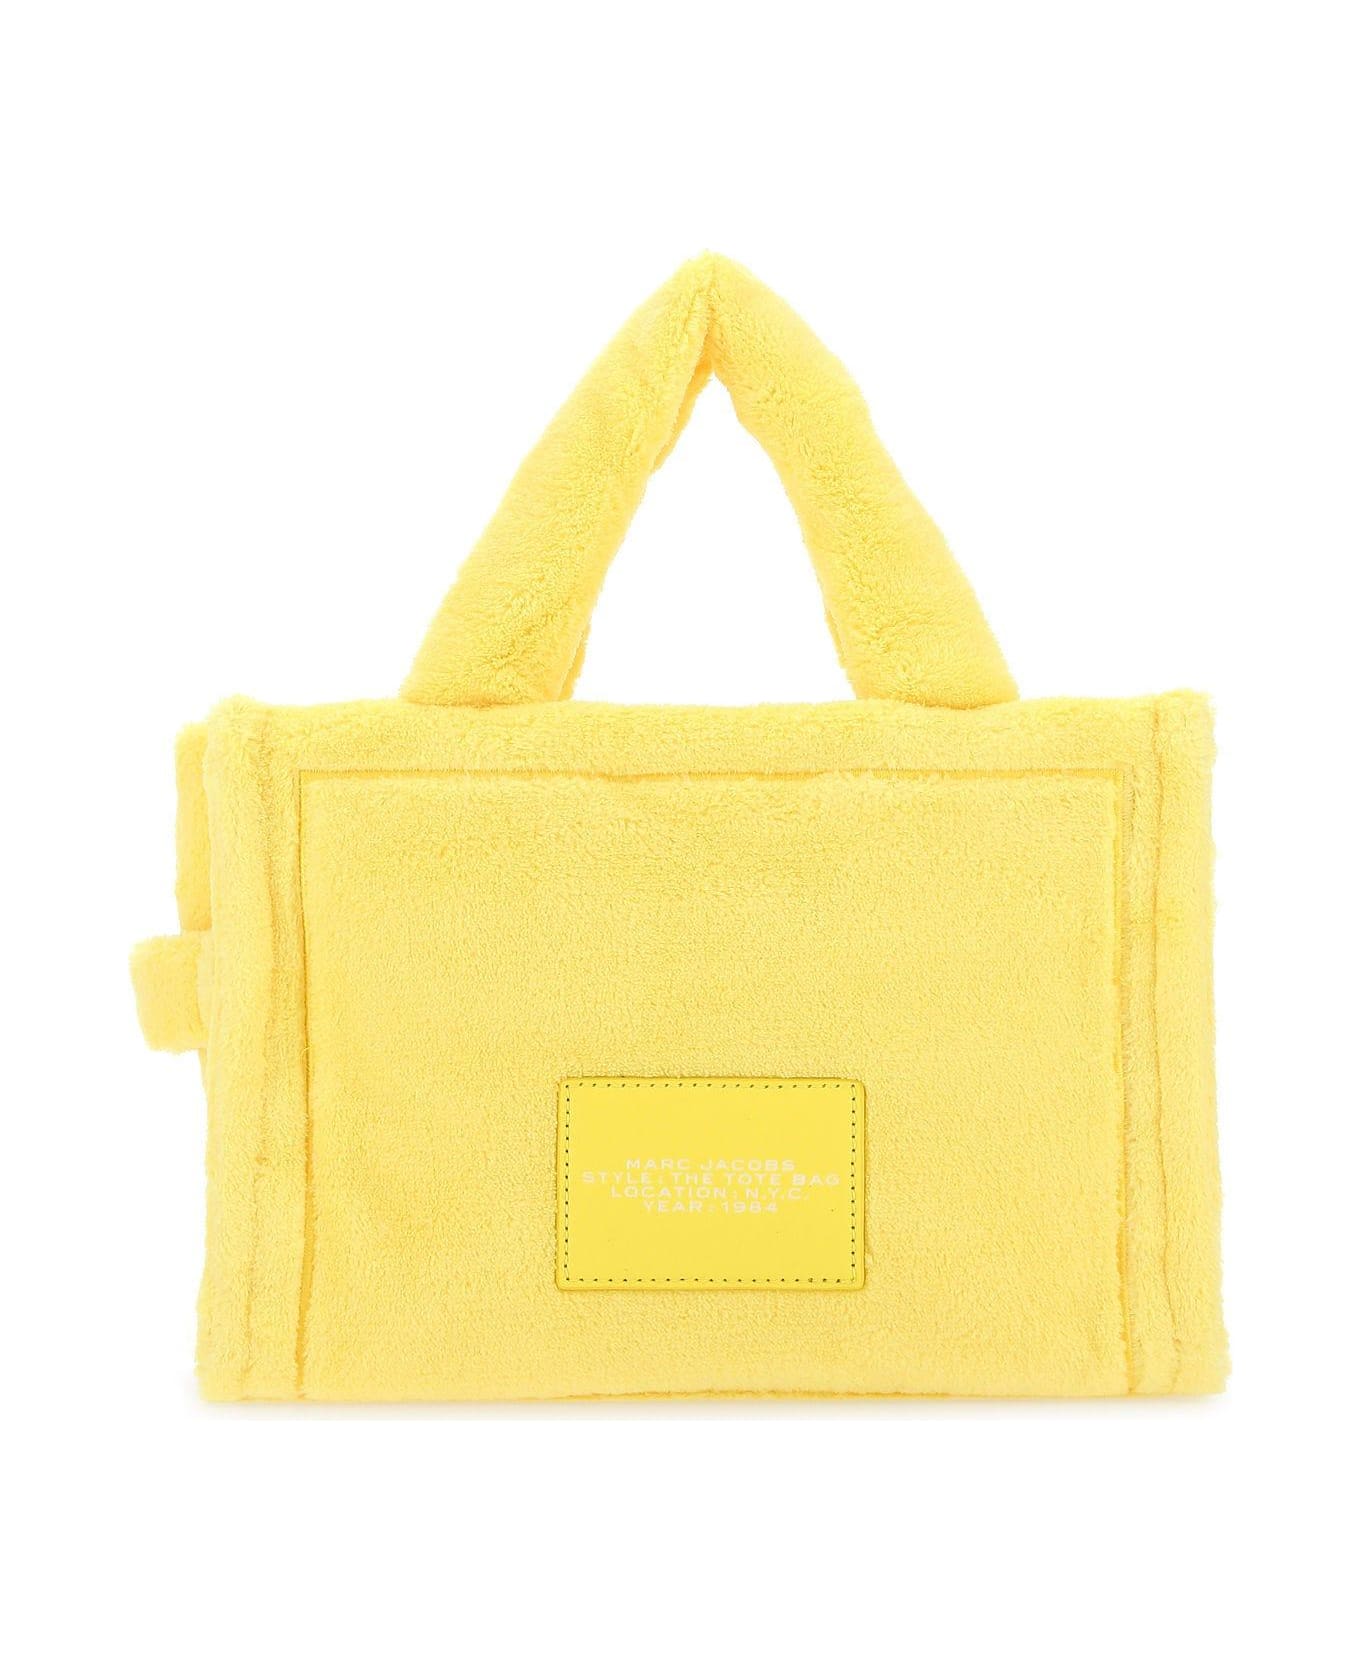 Marc Jacobs Yellow Terry Fabric Mini The Tote Bag Handbag - Yellow